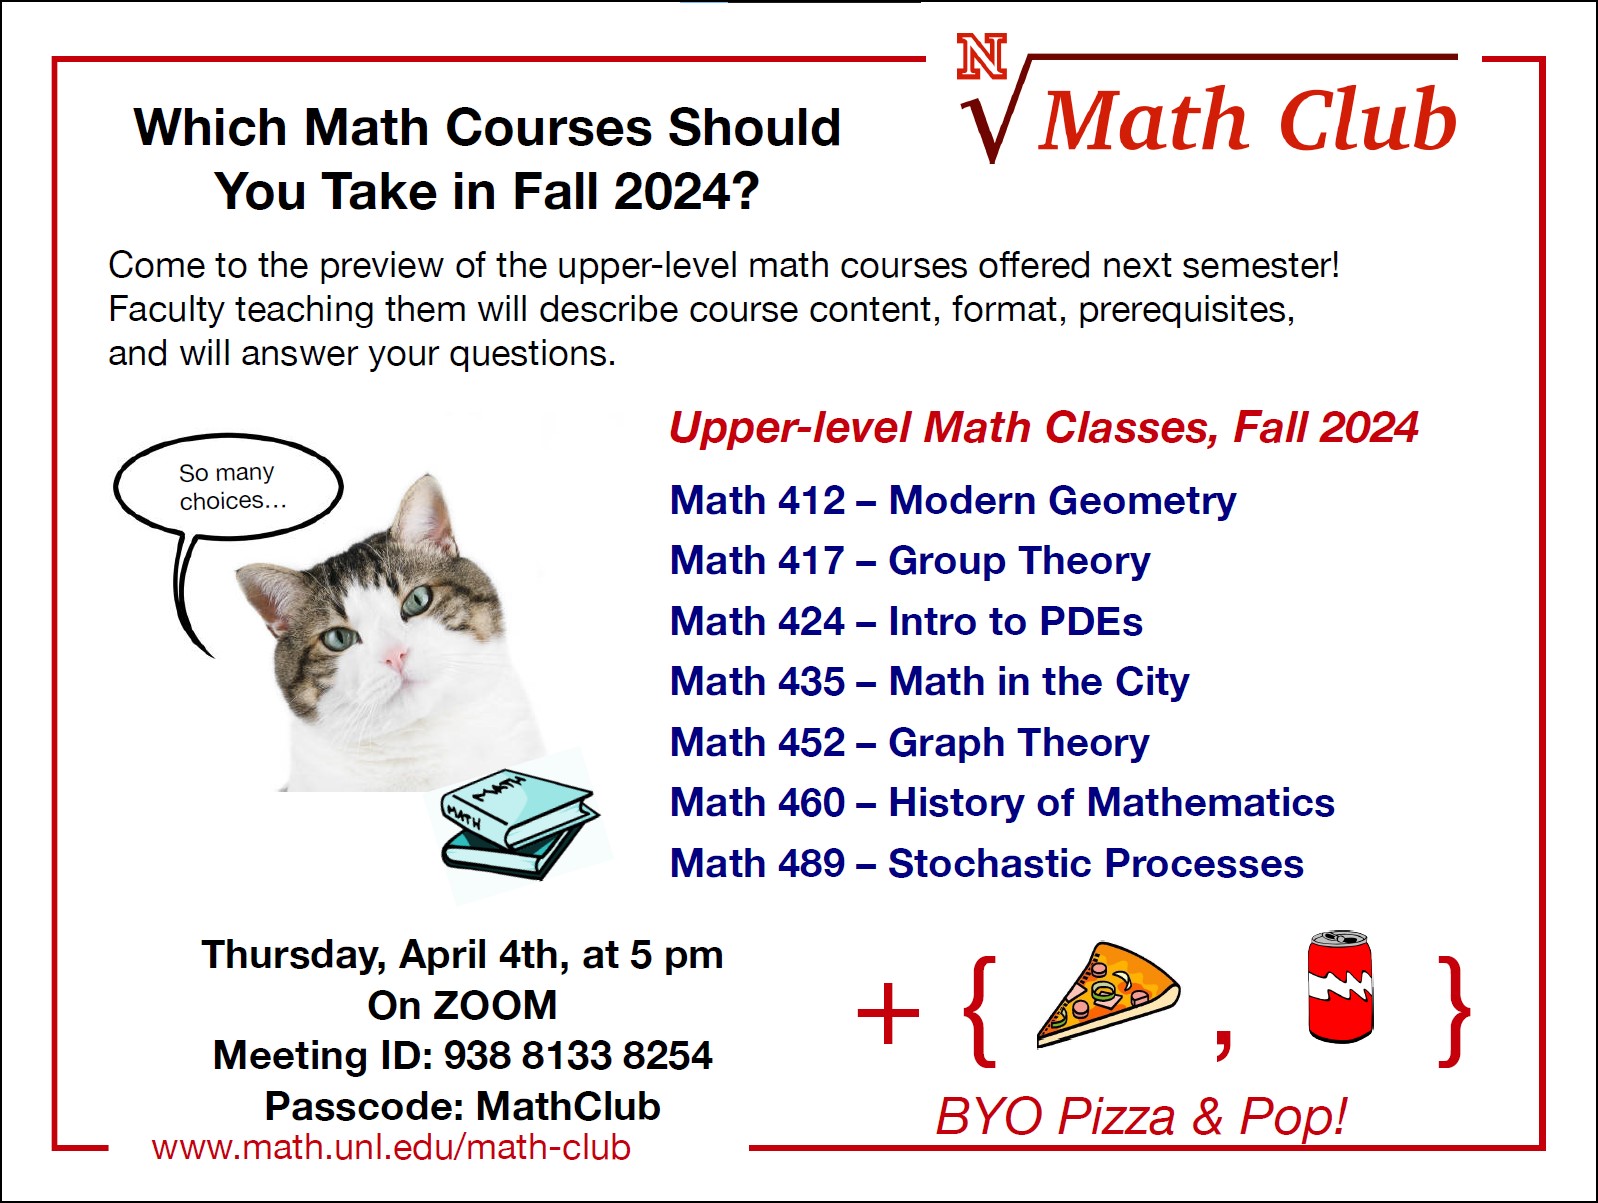 Math Club: Fall 2024 Course Preview